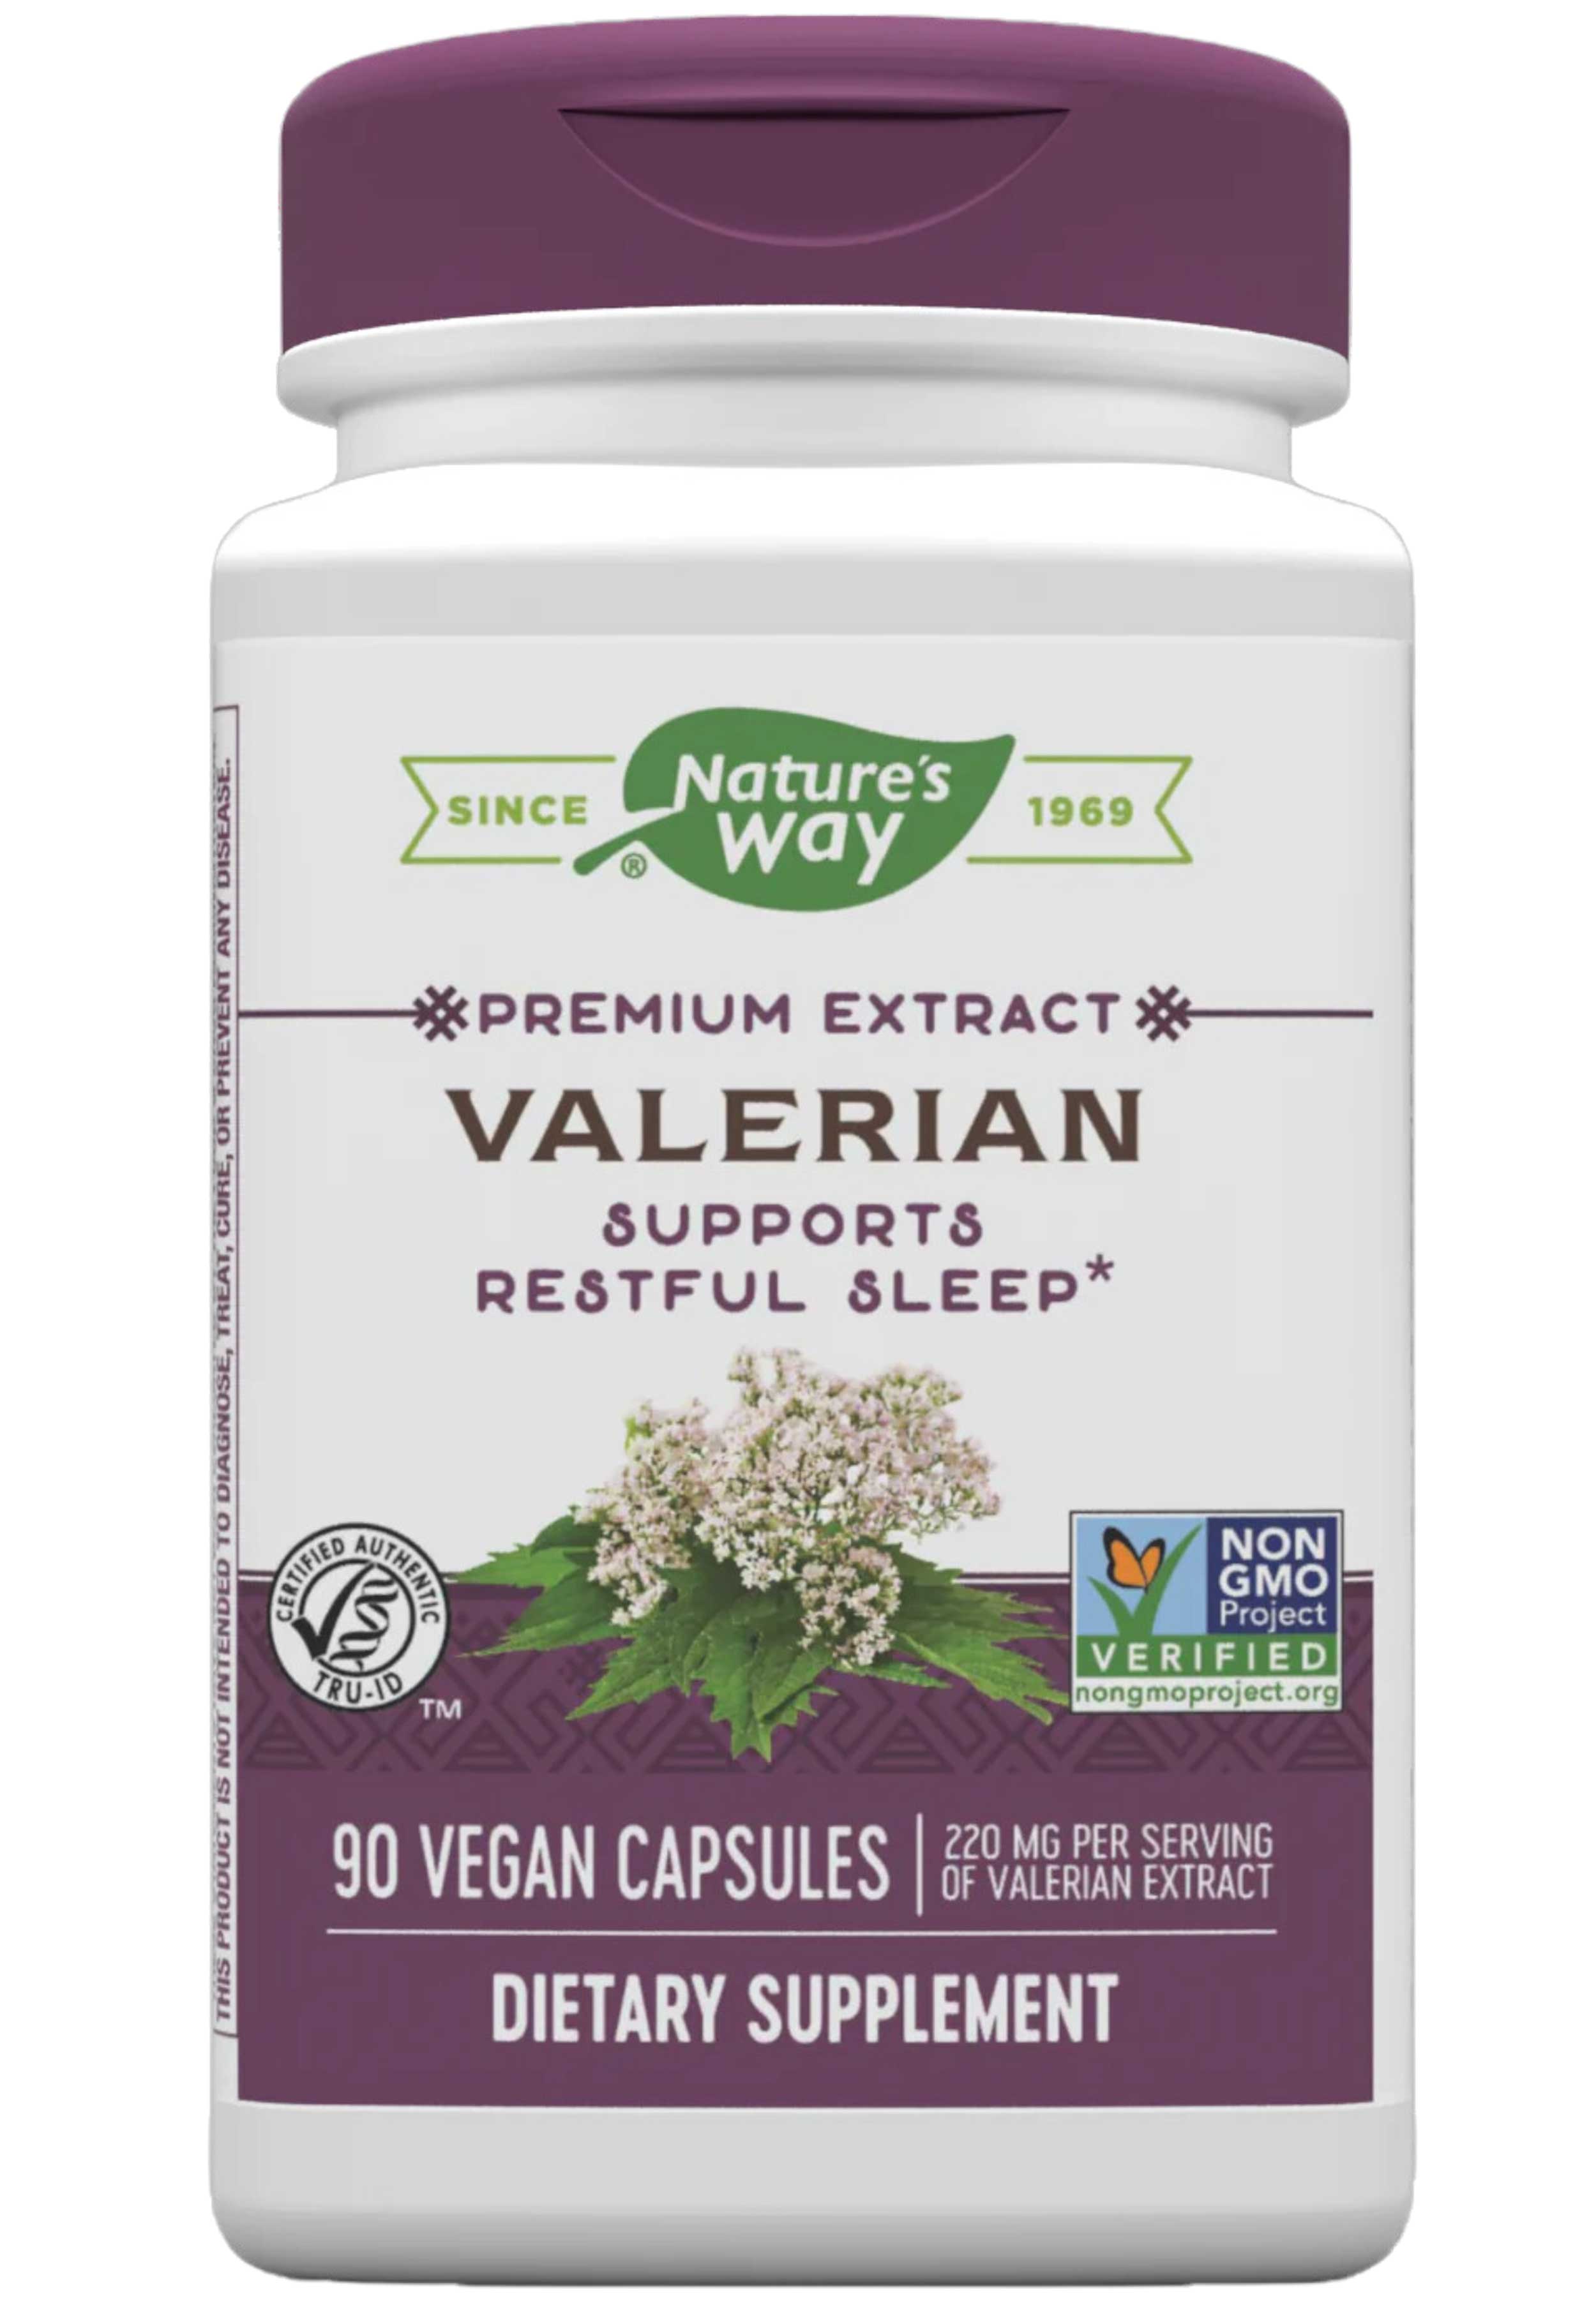 Nature's Way Valerian Premium Extract